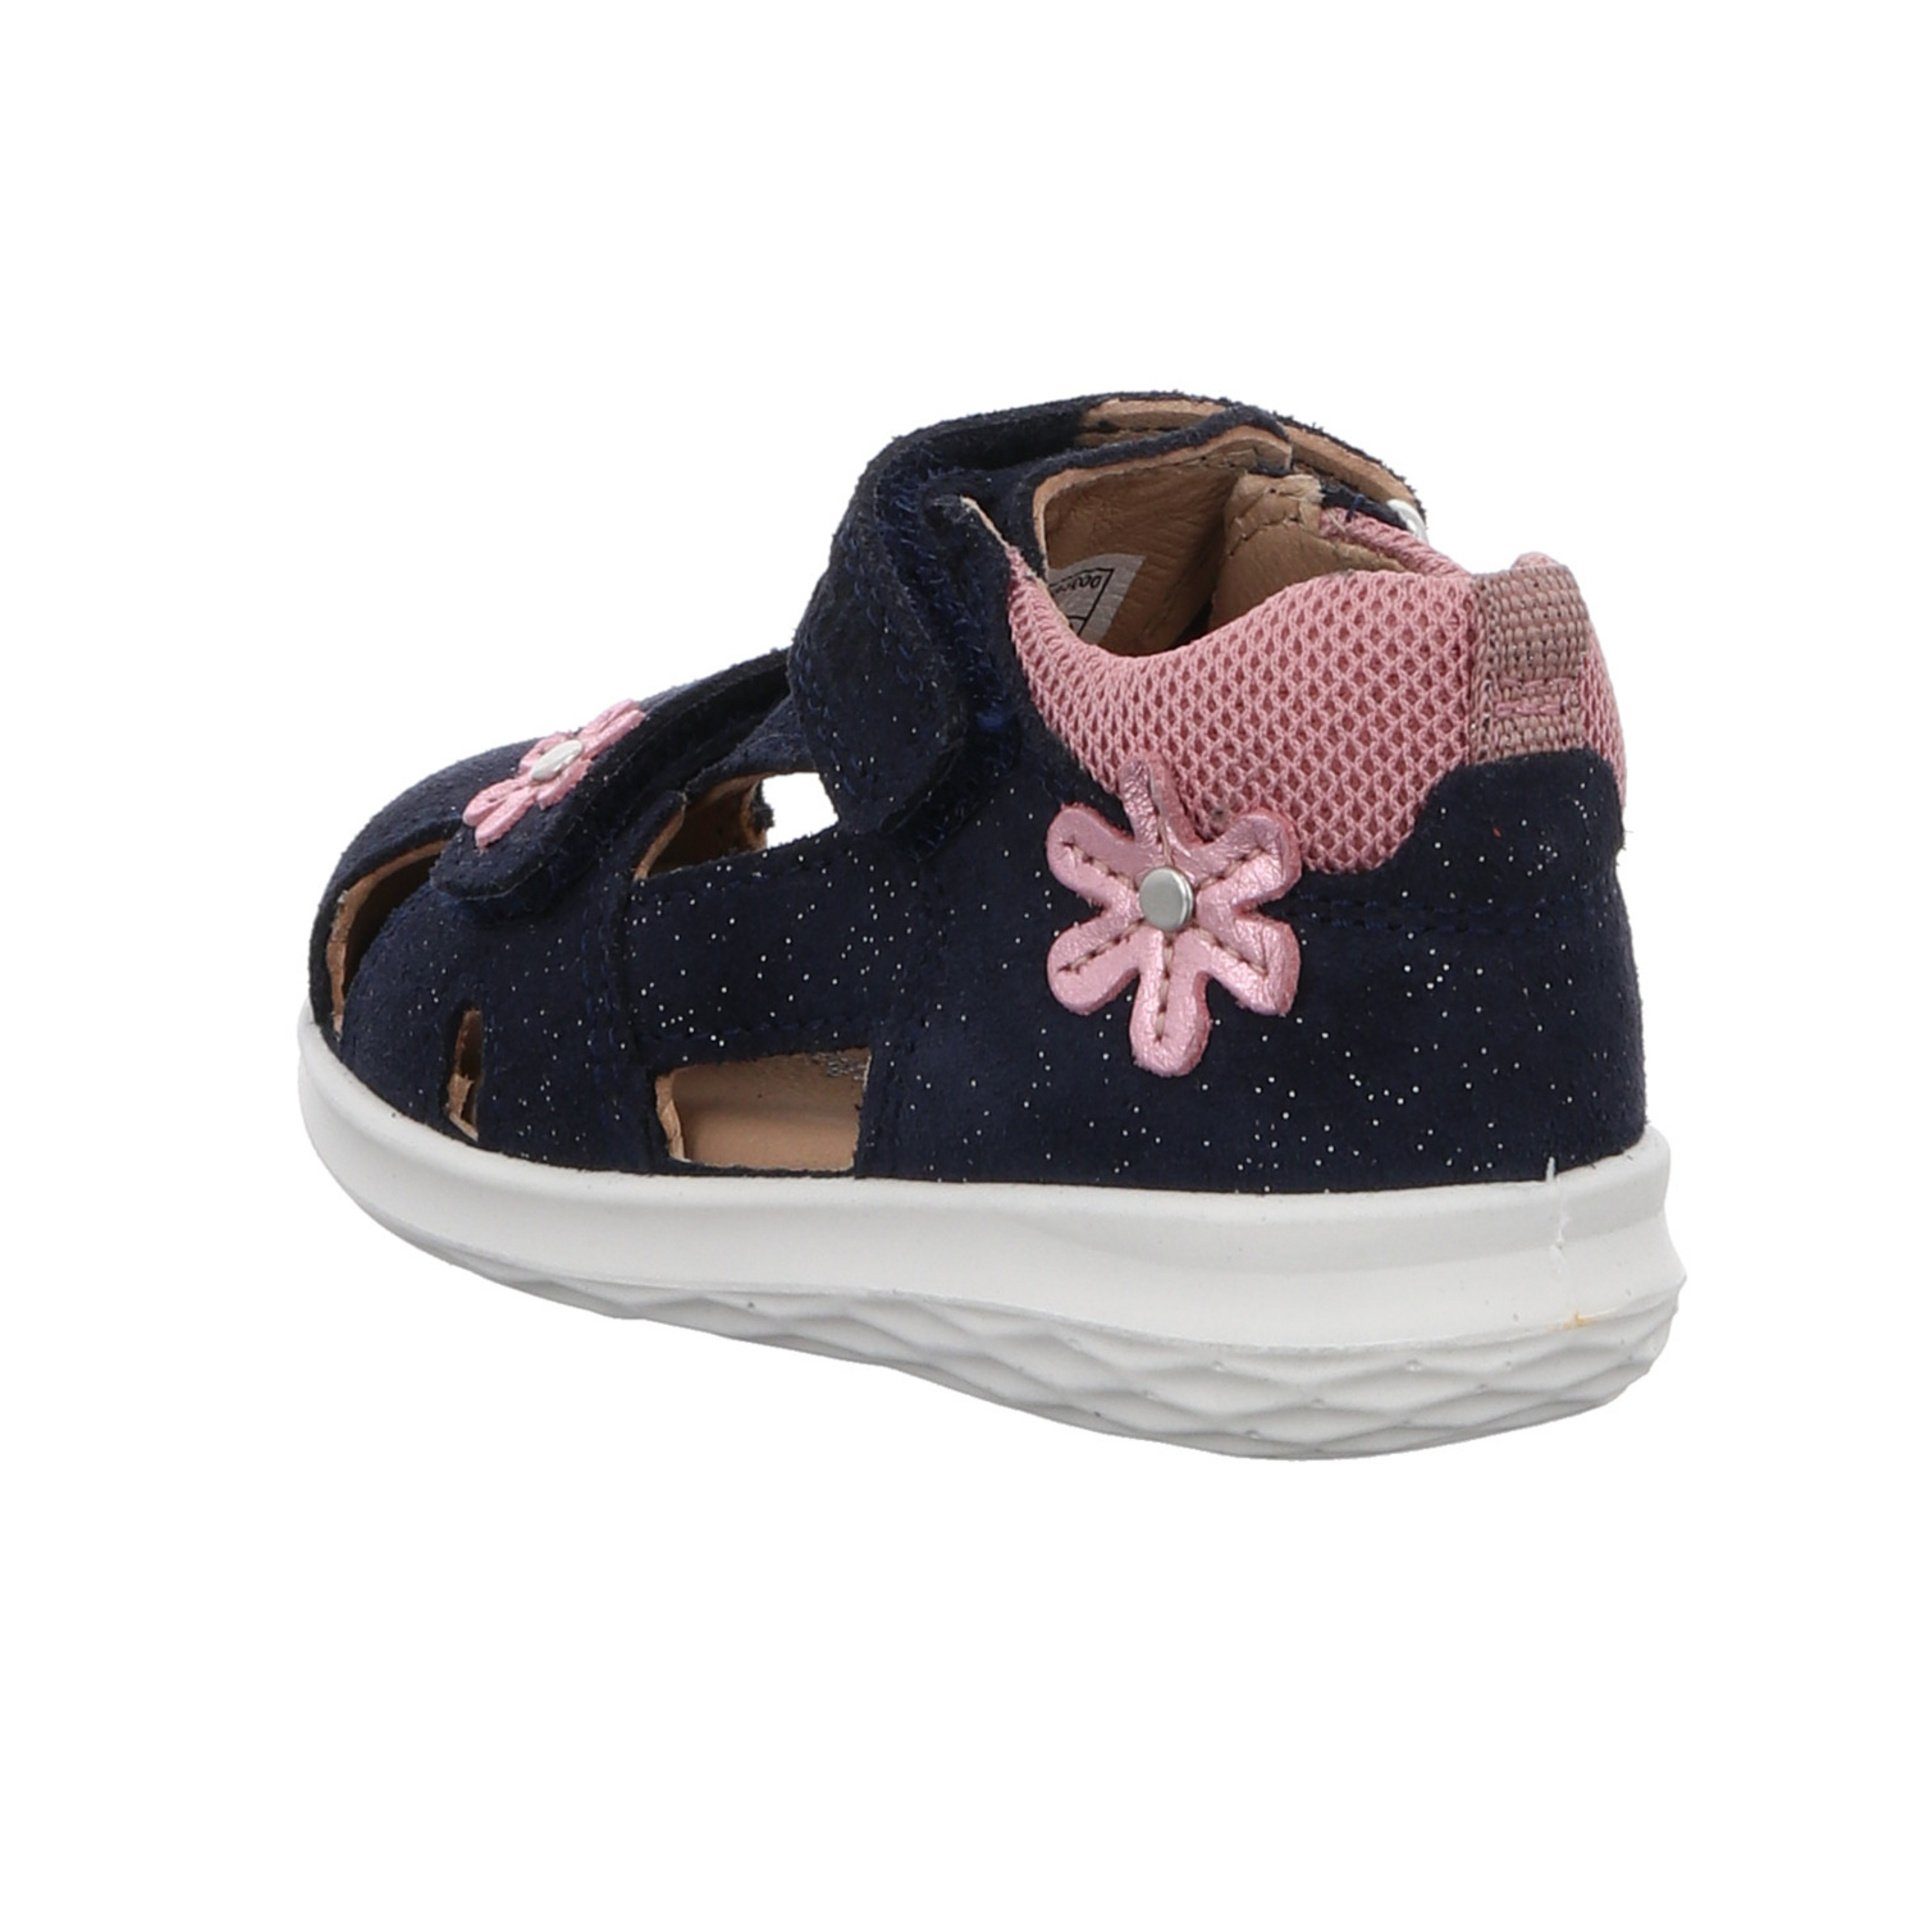 Superfit Mädchen sonst Bumblebee Minilette Leder-/Textilkombination Schuhe Sandale Sandalen blau Kombi